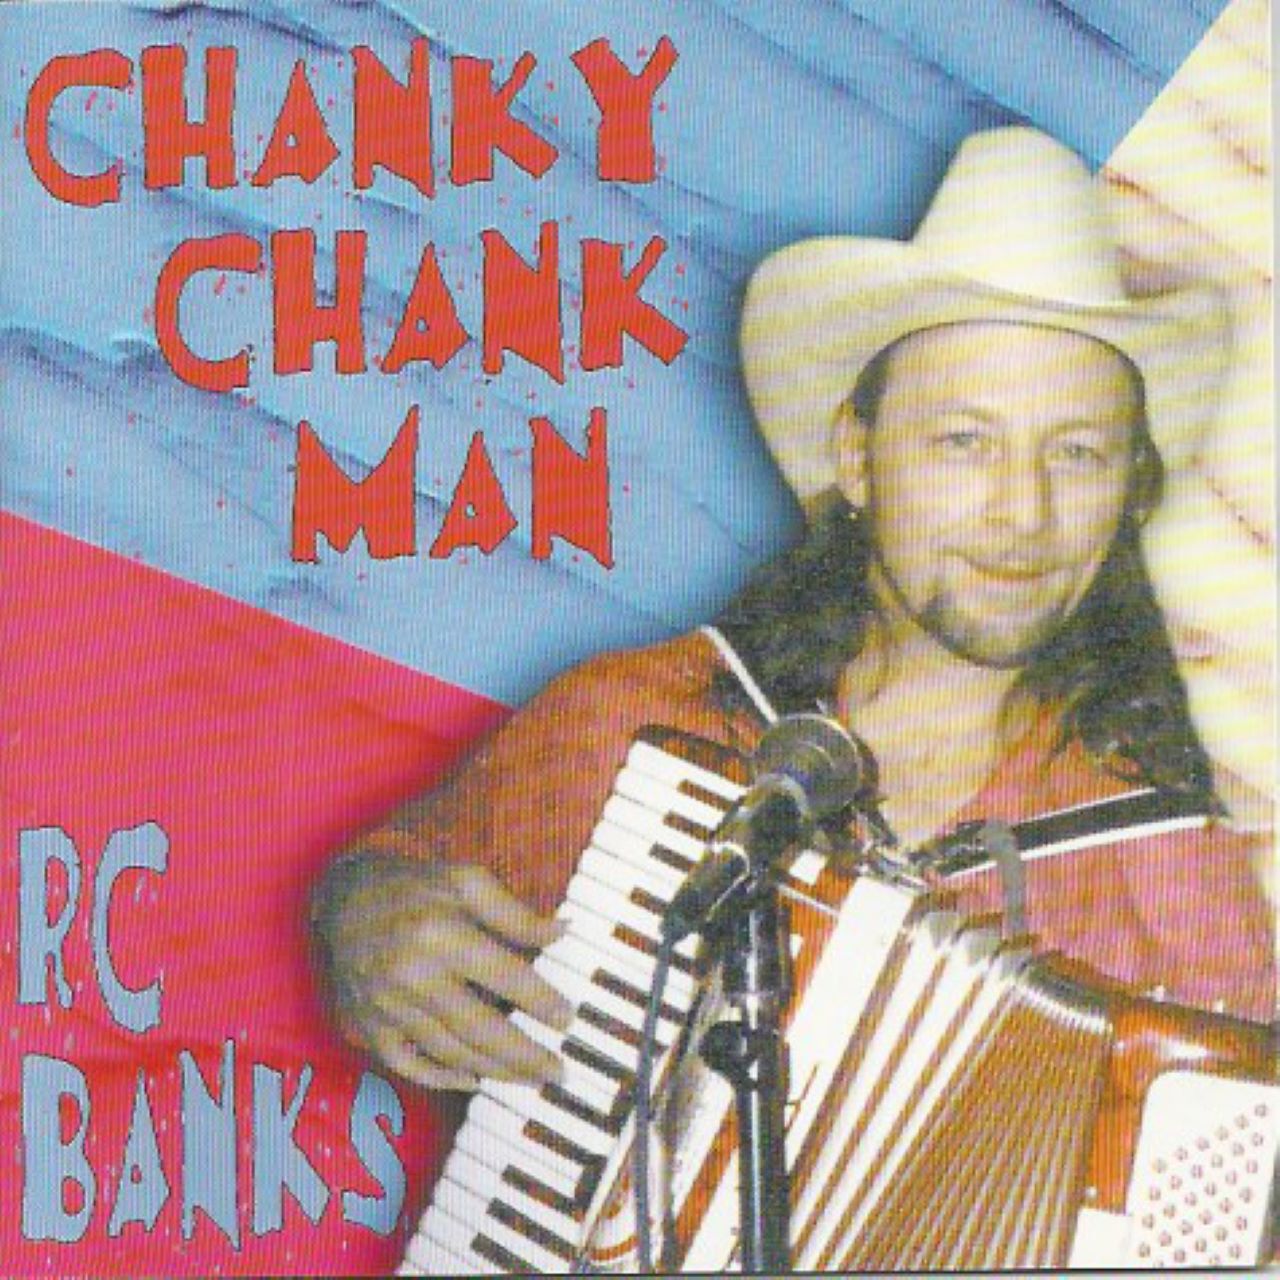 R.C. Banks - Chanky Chank Man cover album